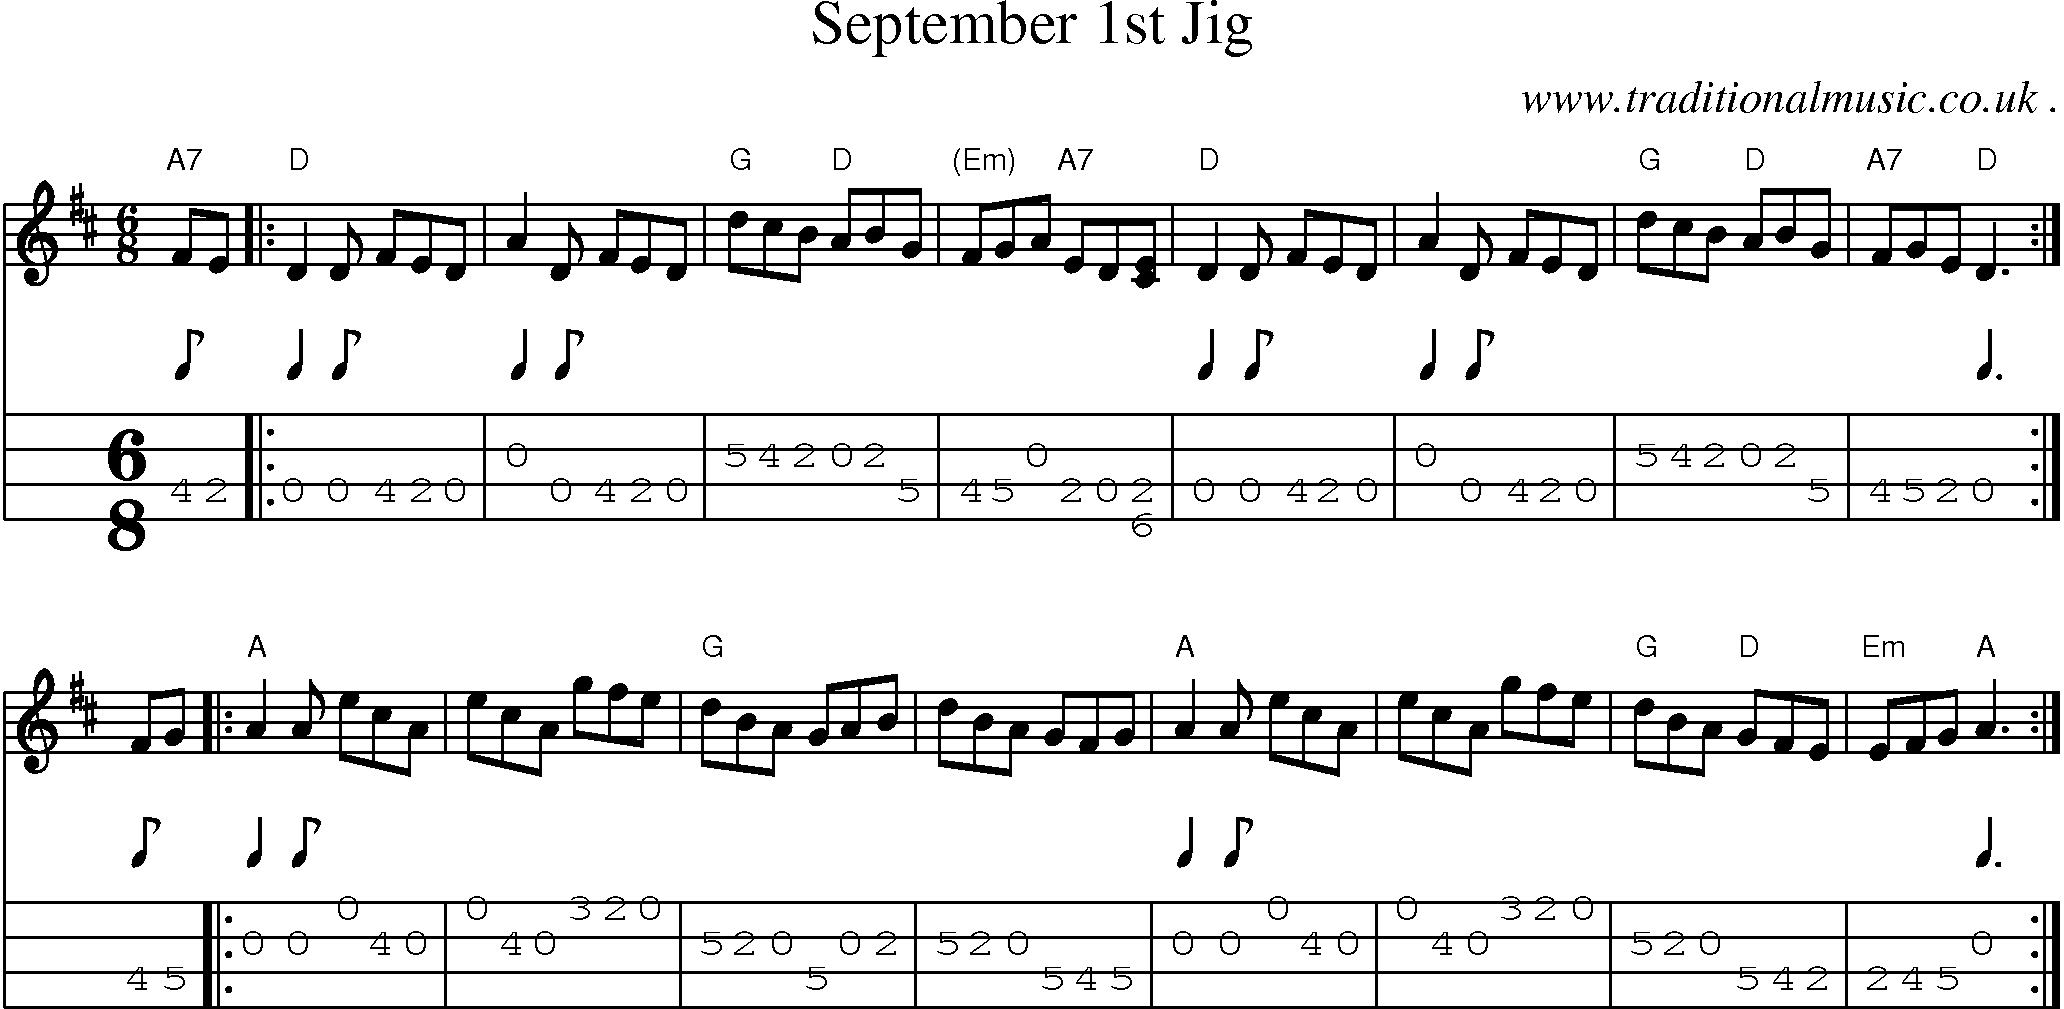 Sheet-music  score, Chords and Mandolin Tabs for September 1st Jig